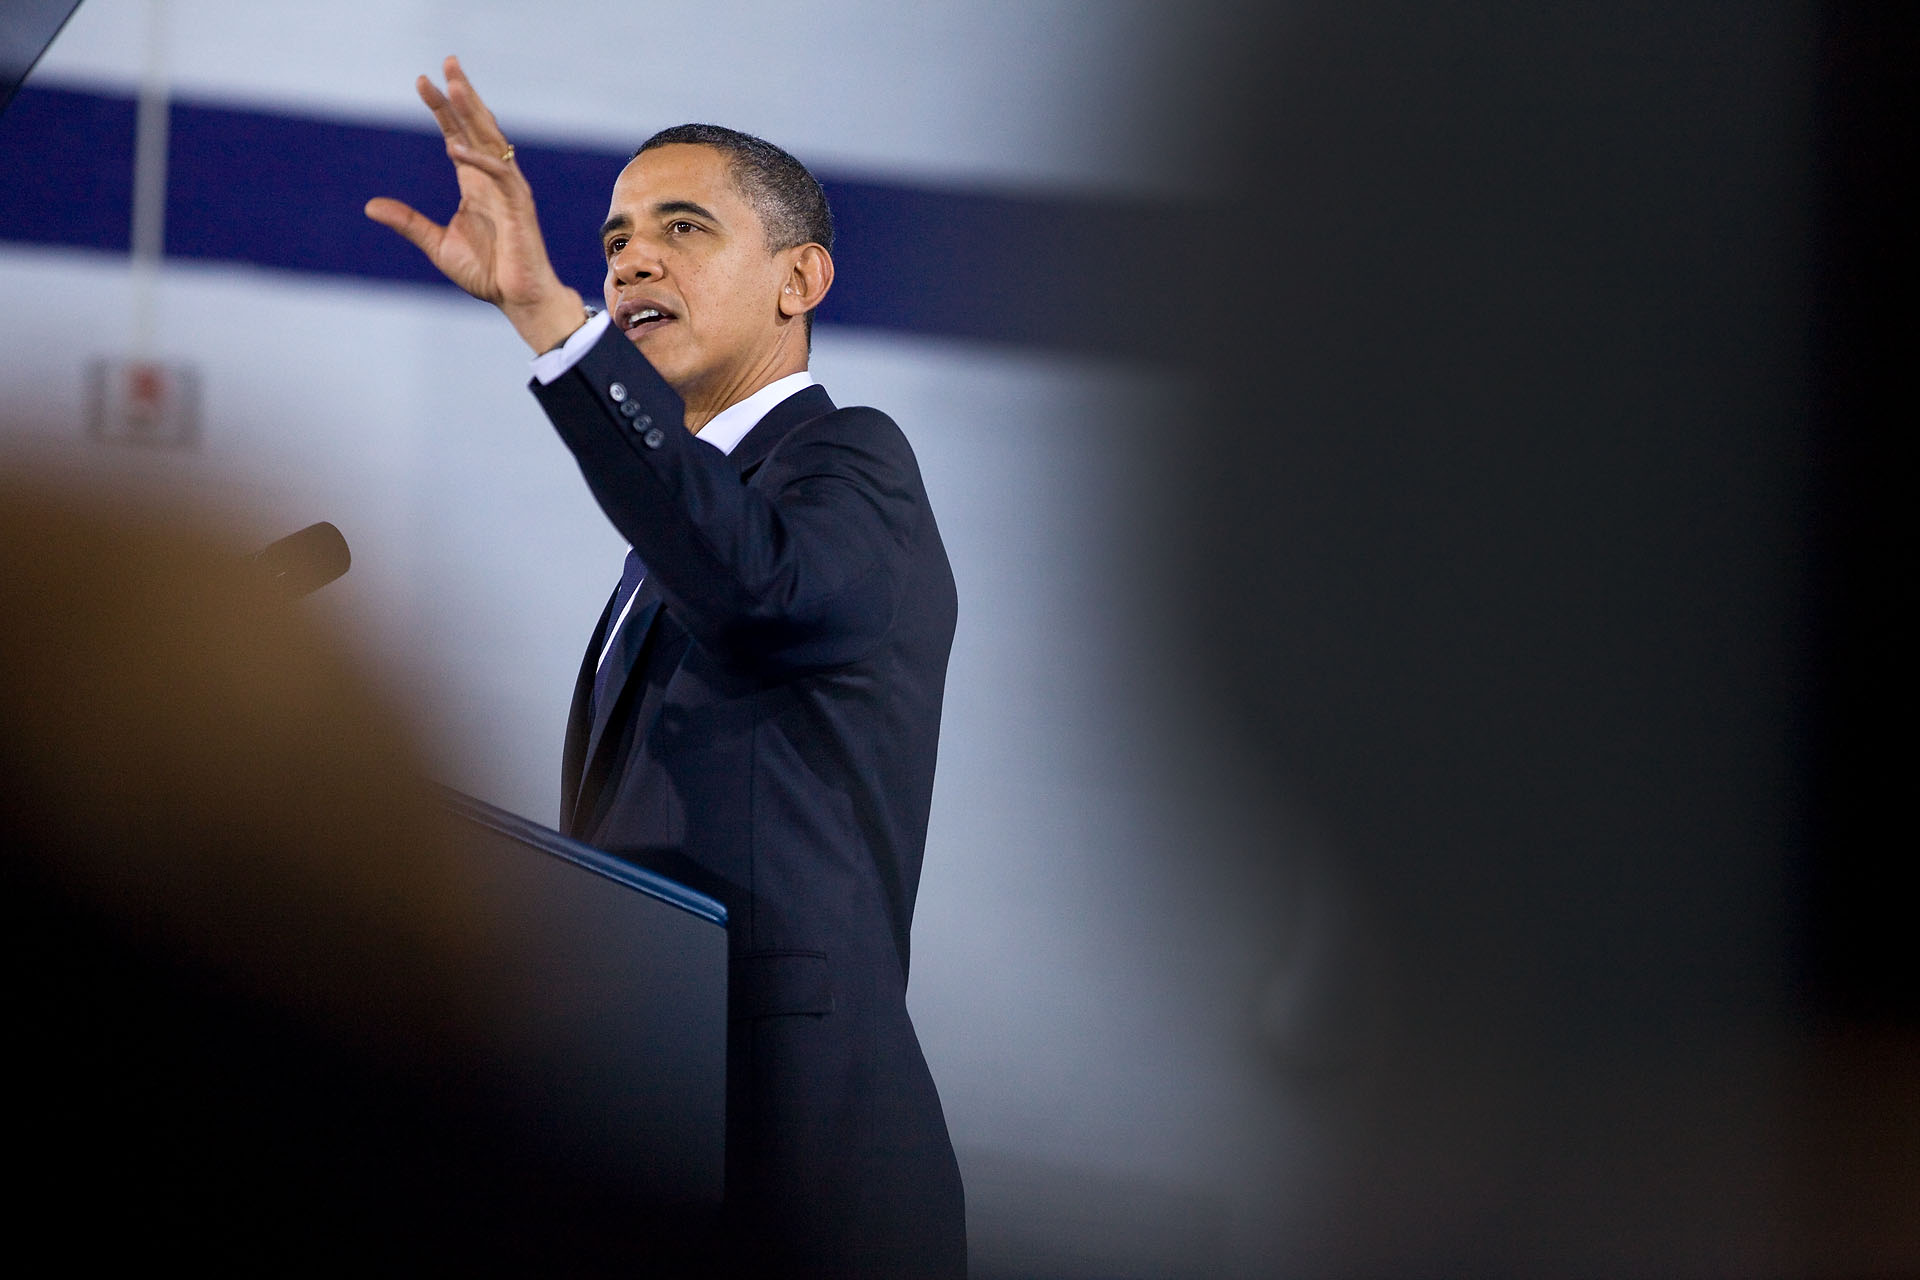 President Obama Delivers Remarks at Forsyth Technical College